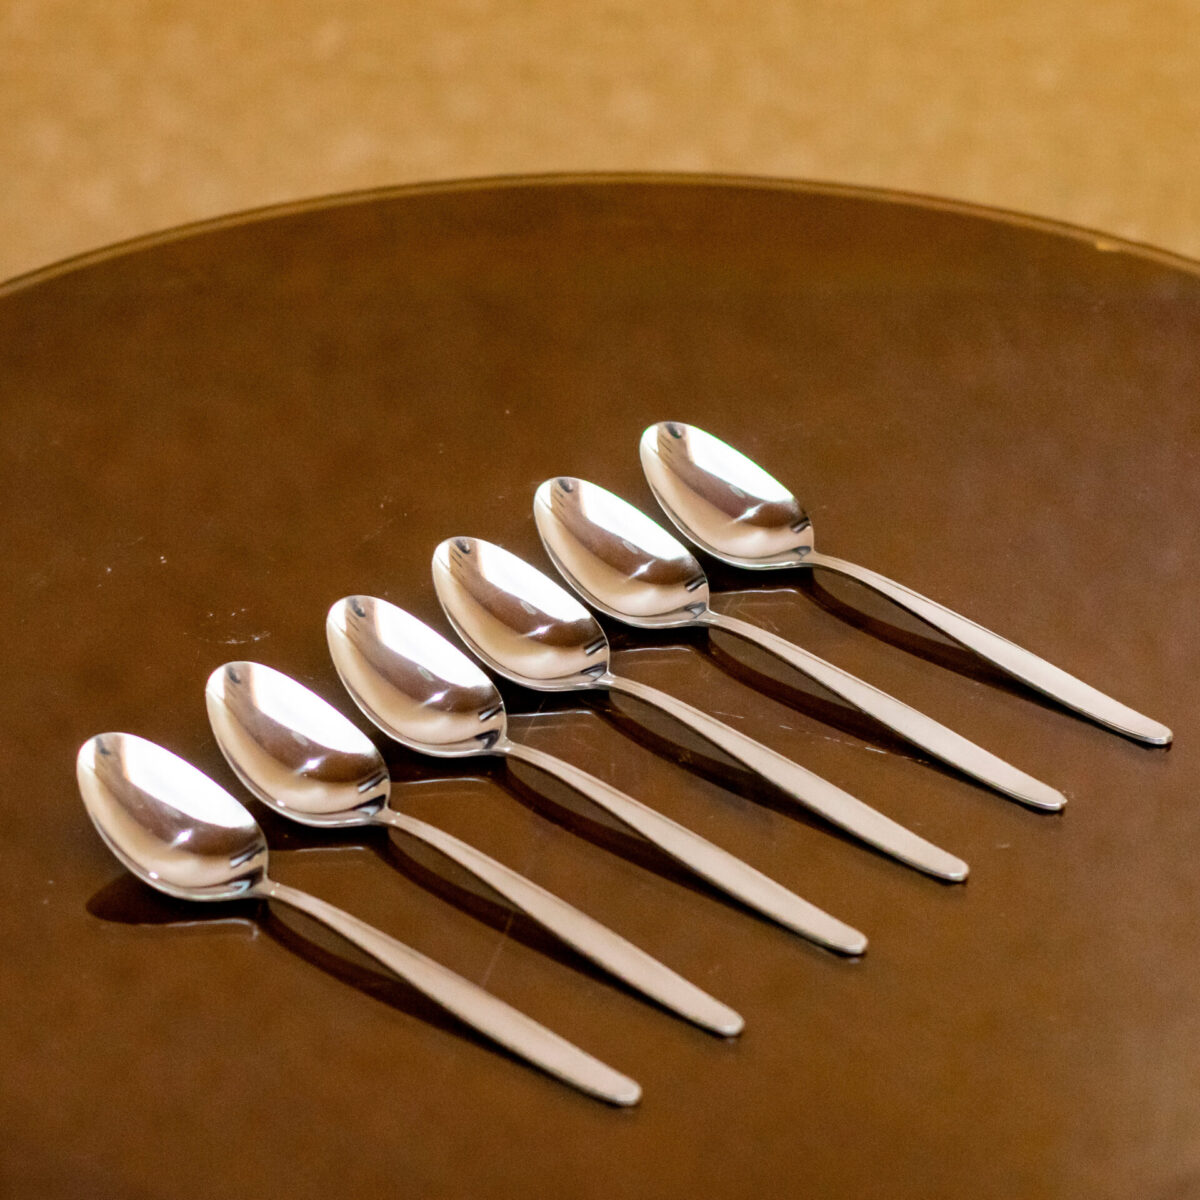 mono-table-spoons-6-pc-set-069117